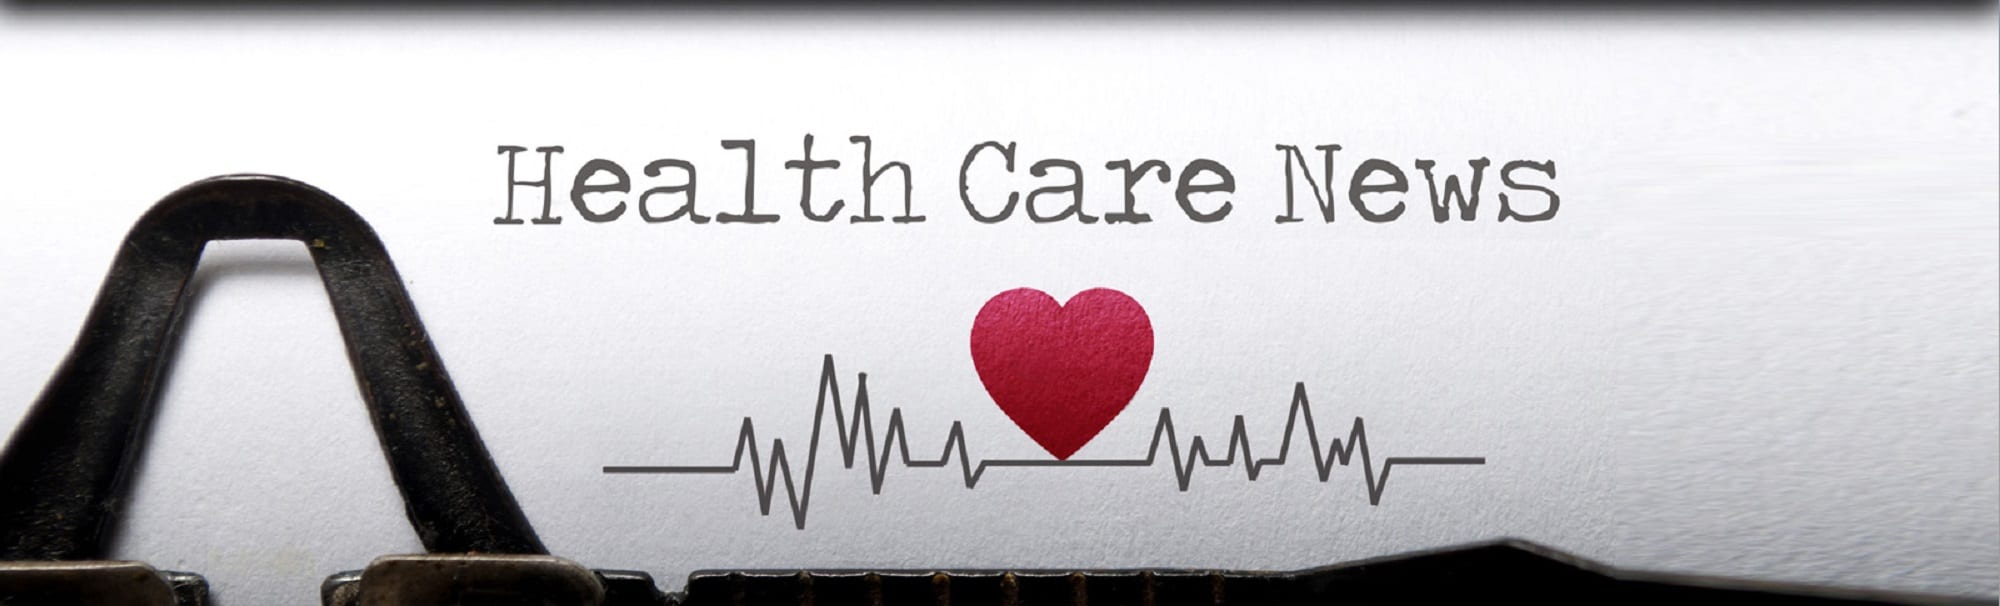 Health Care News & Wellness Blog